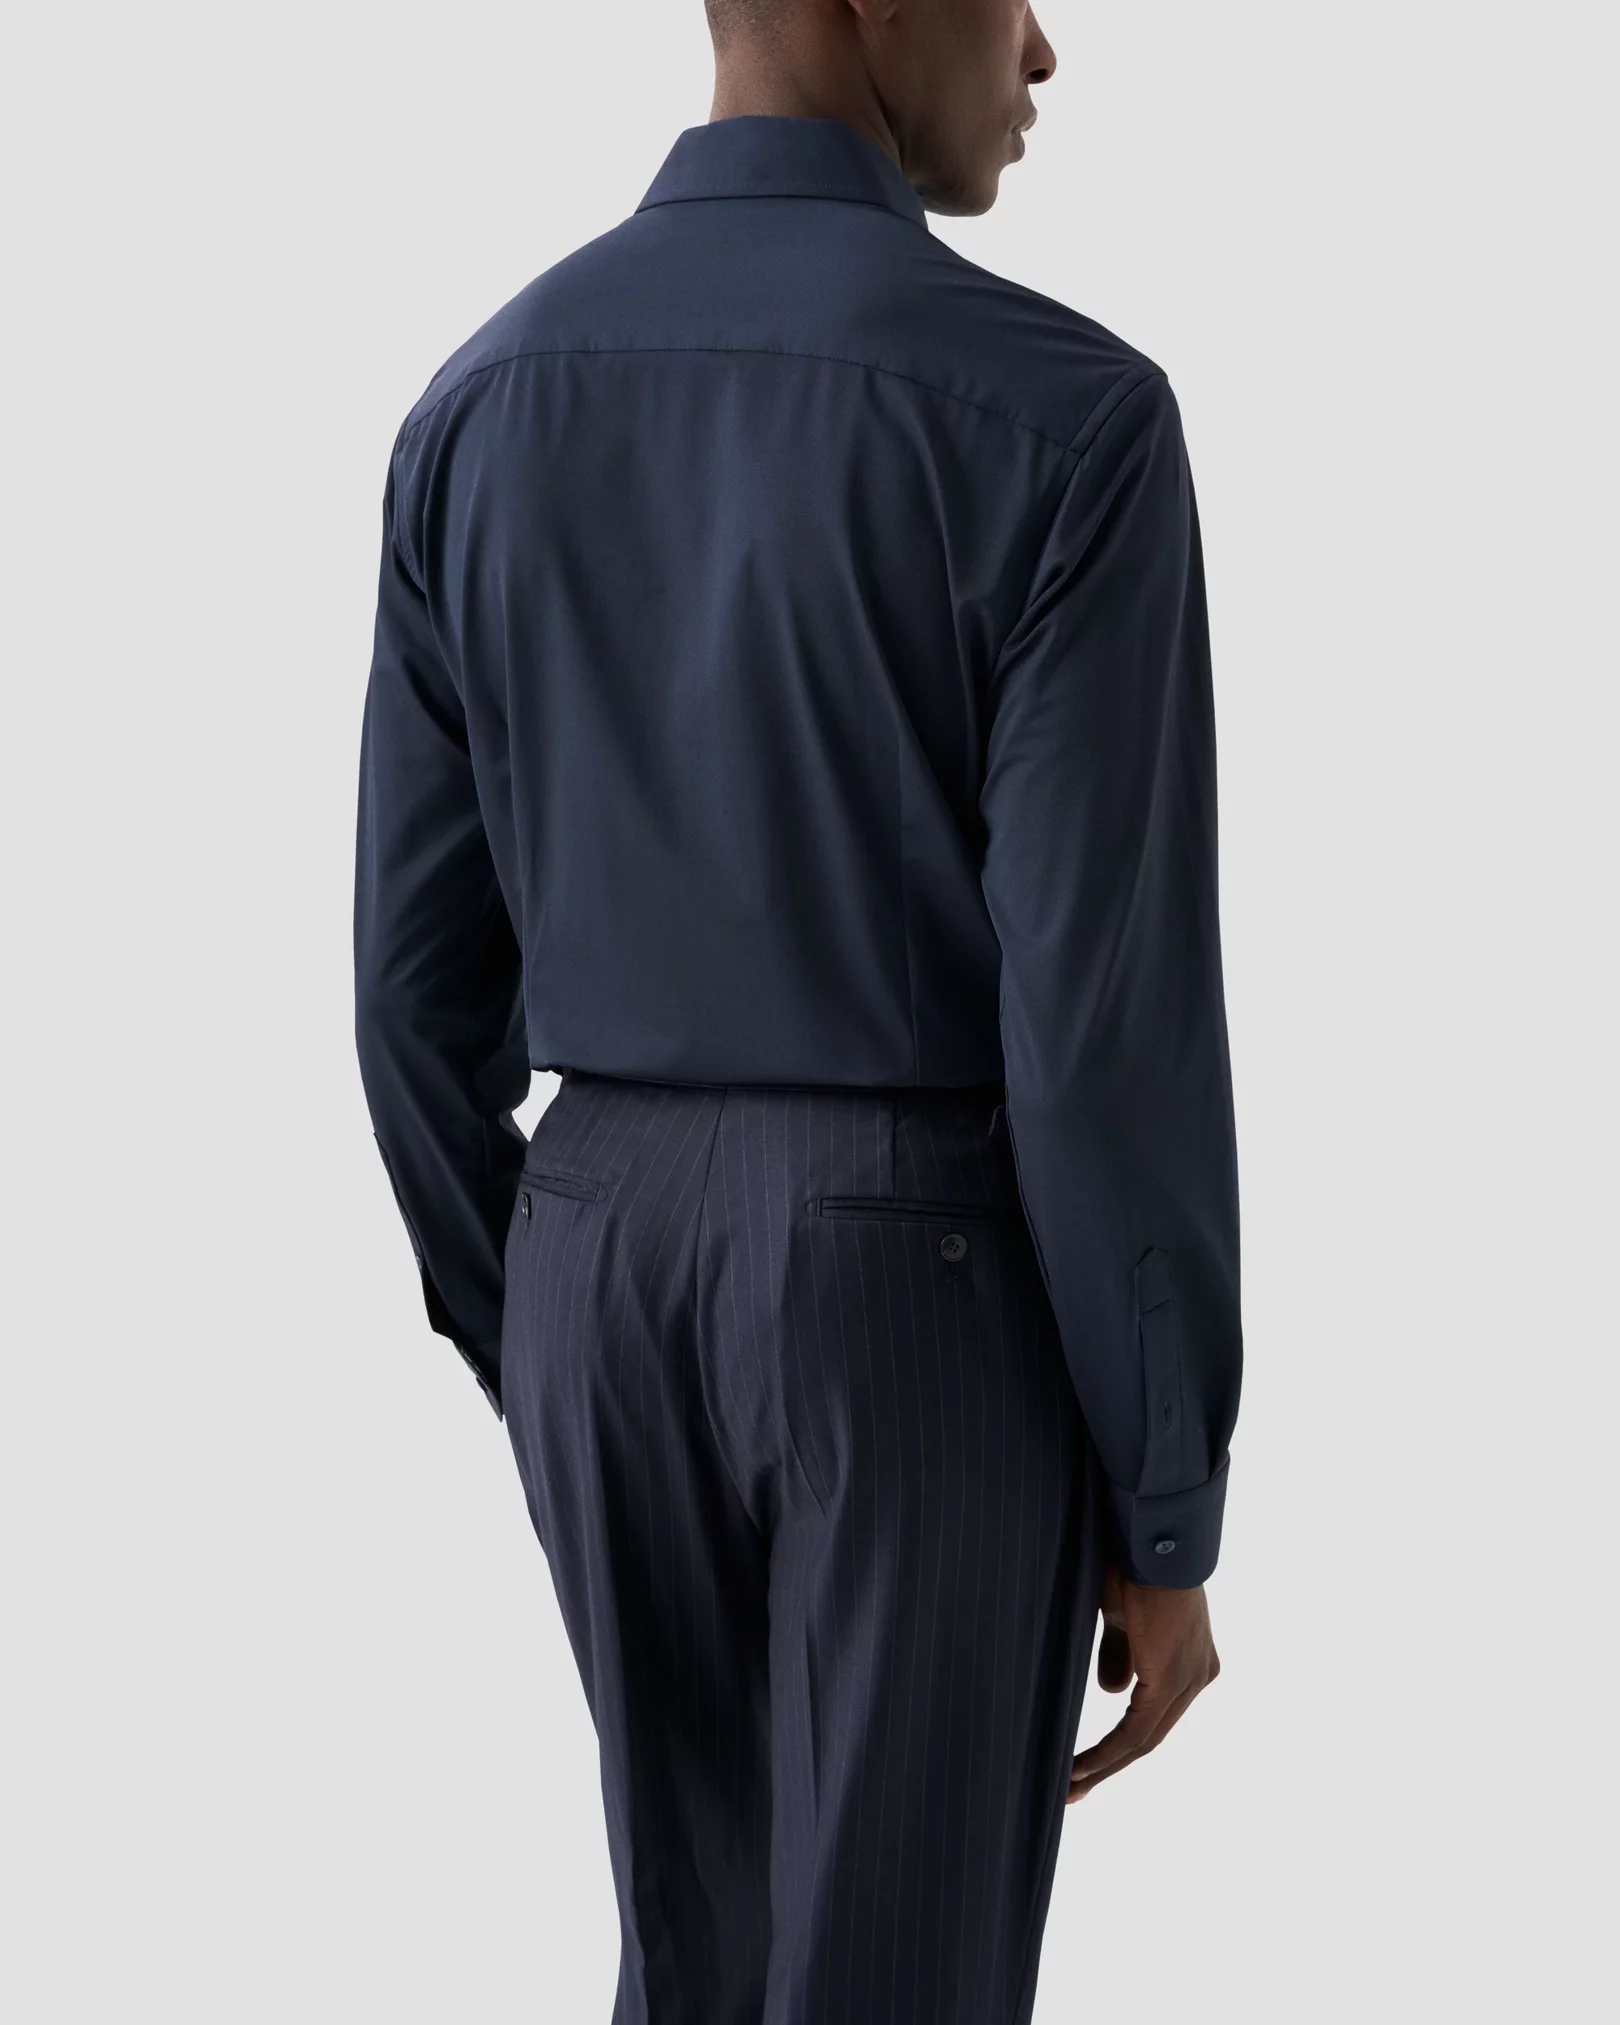 Eton - navy blue four way stretch shirt